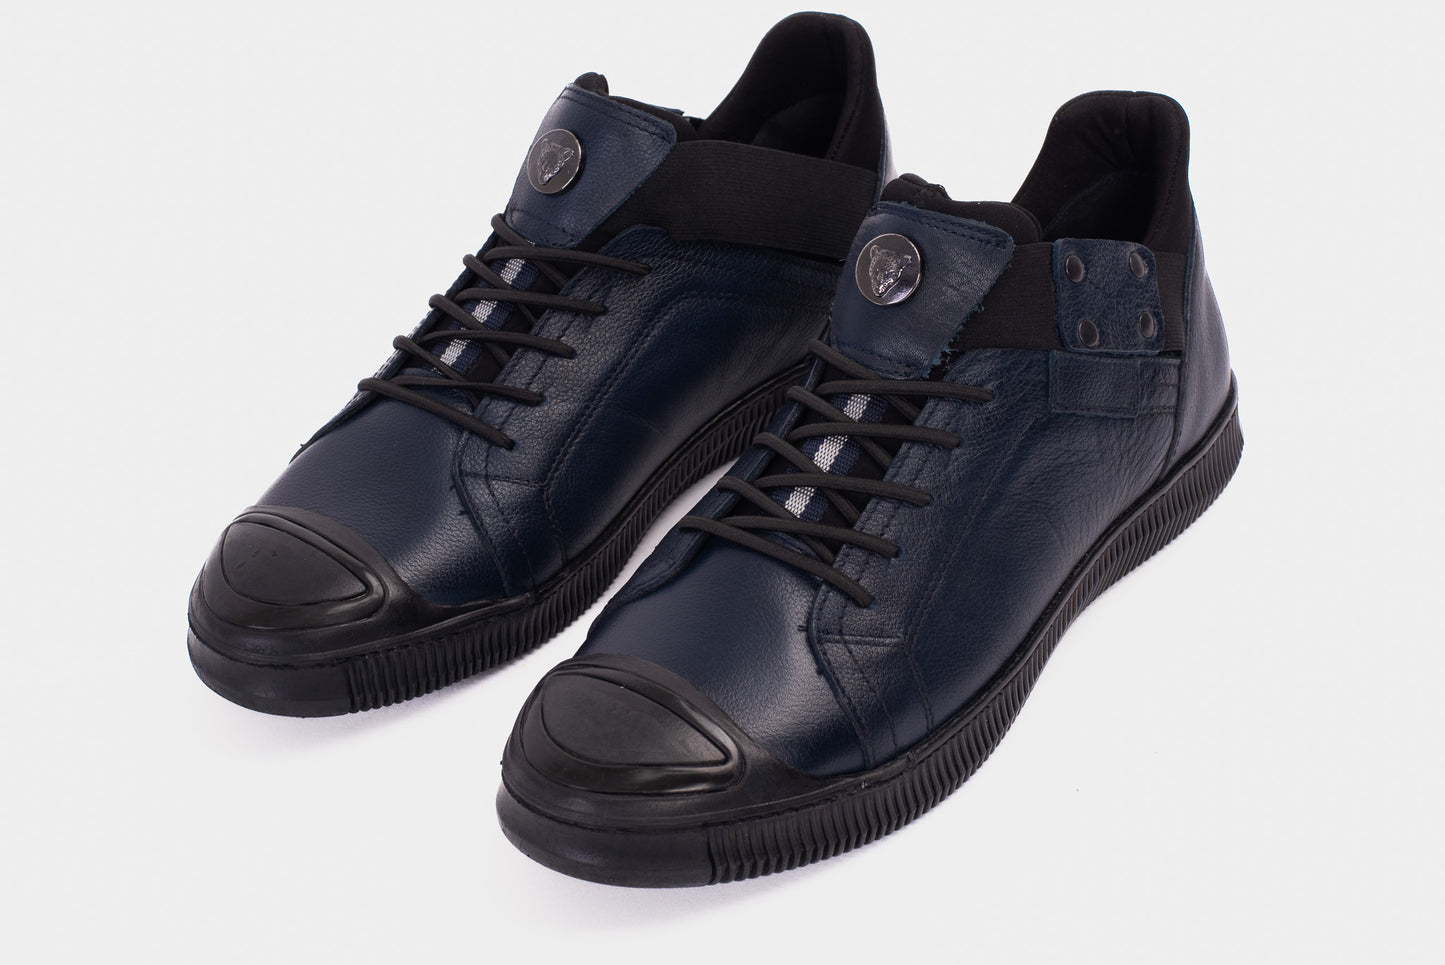 The Mumbai Navy Blue Leather Men Sneaker